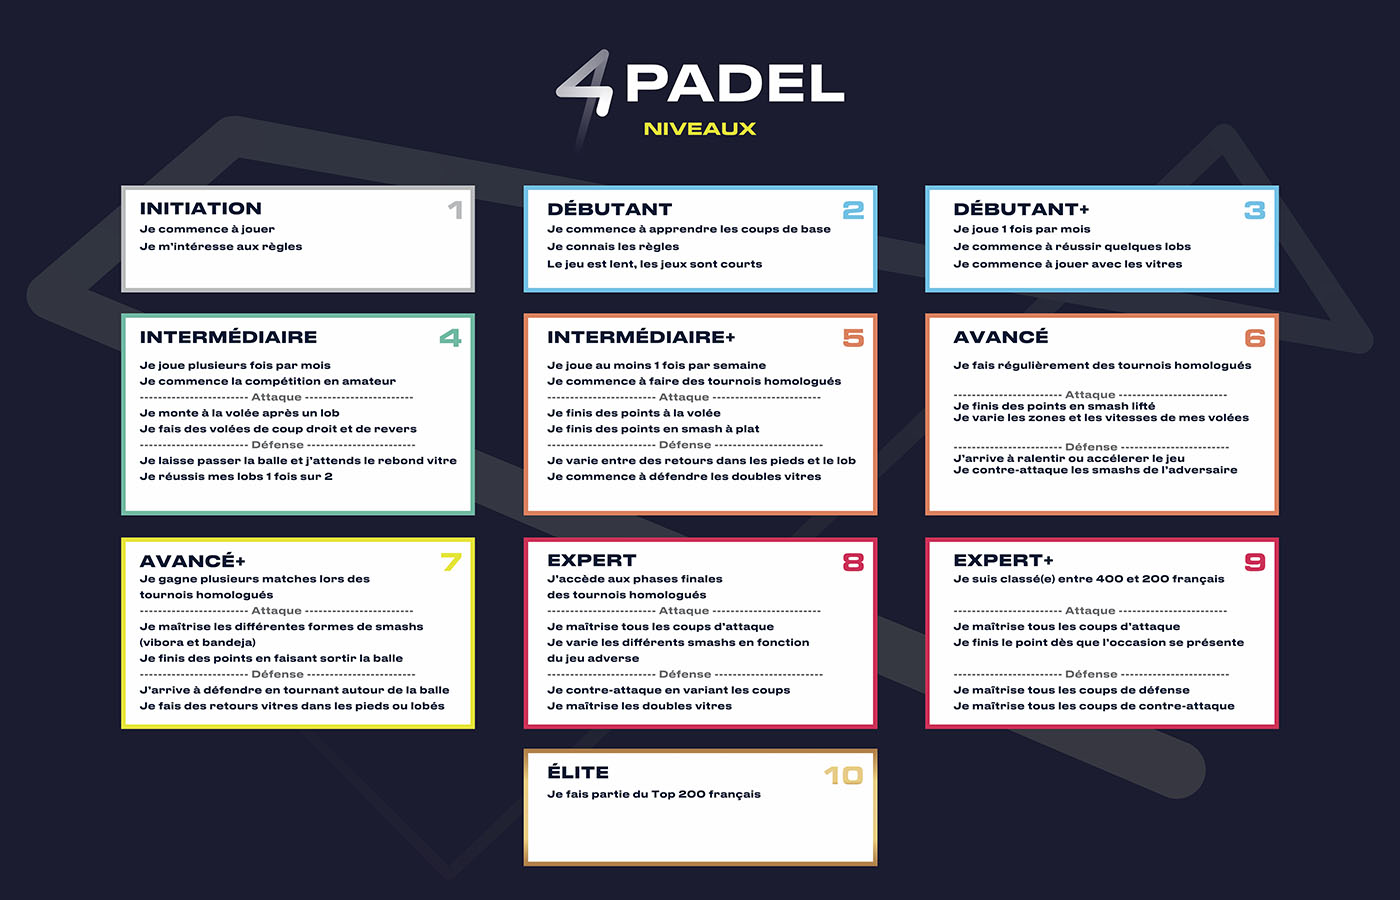 4PADEL 新闻重访了 Padel 周围